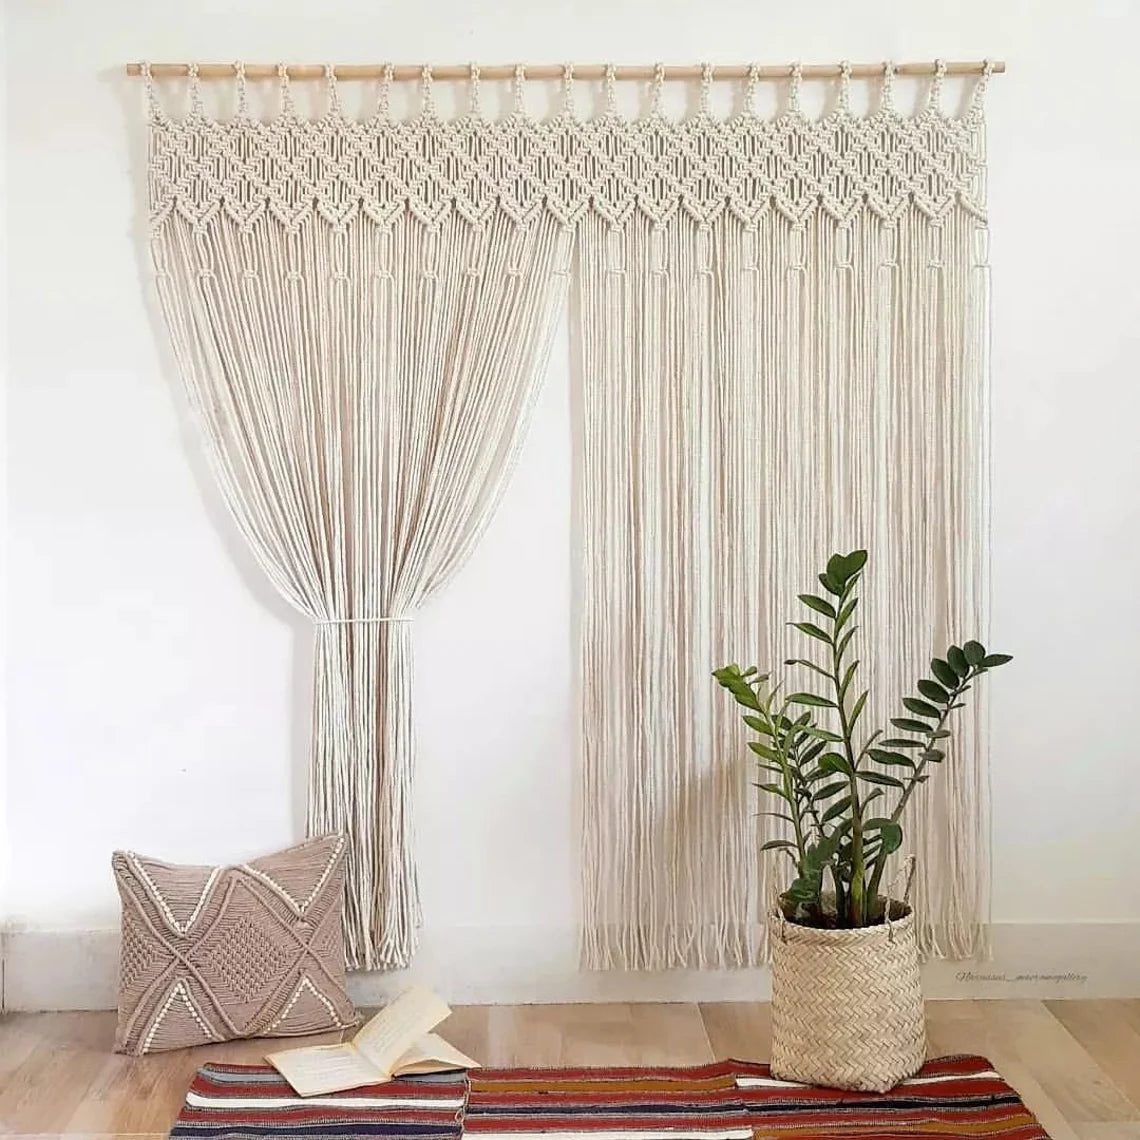 Bohemian Macrame Curtain for Door or Window Handmade Macrame